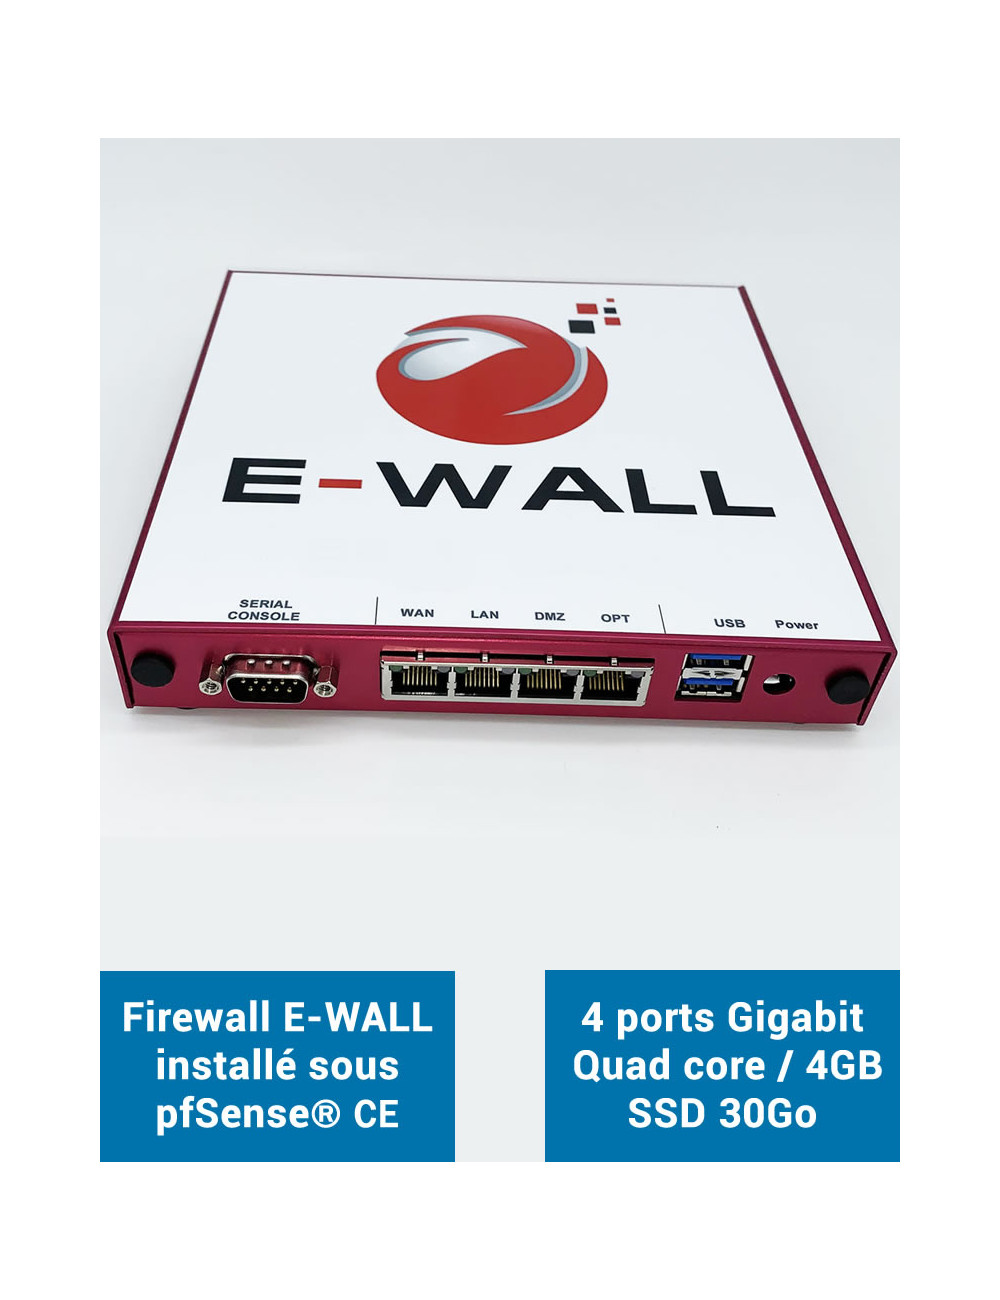 Firewall Appliance AP444 under pfSense® CE 4 ports 4GB SSD 30GB